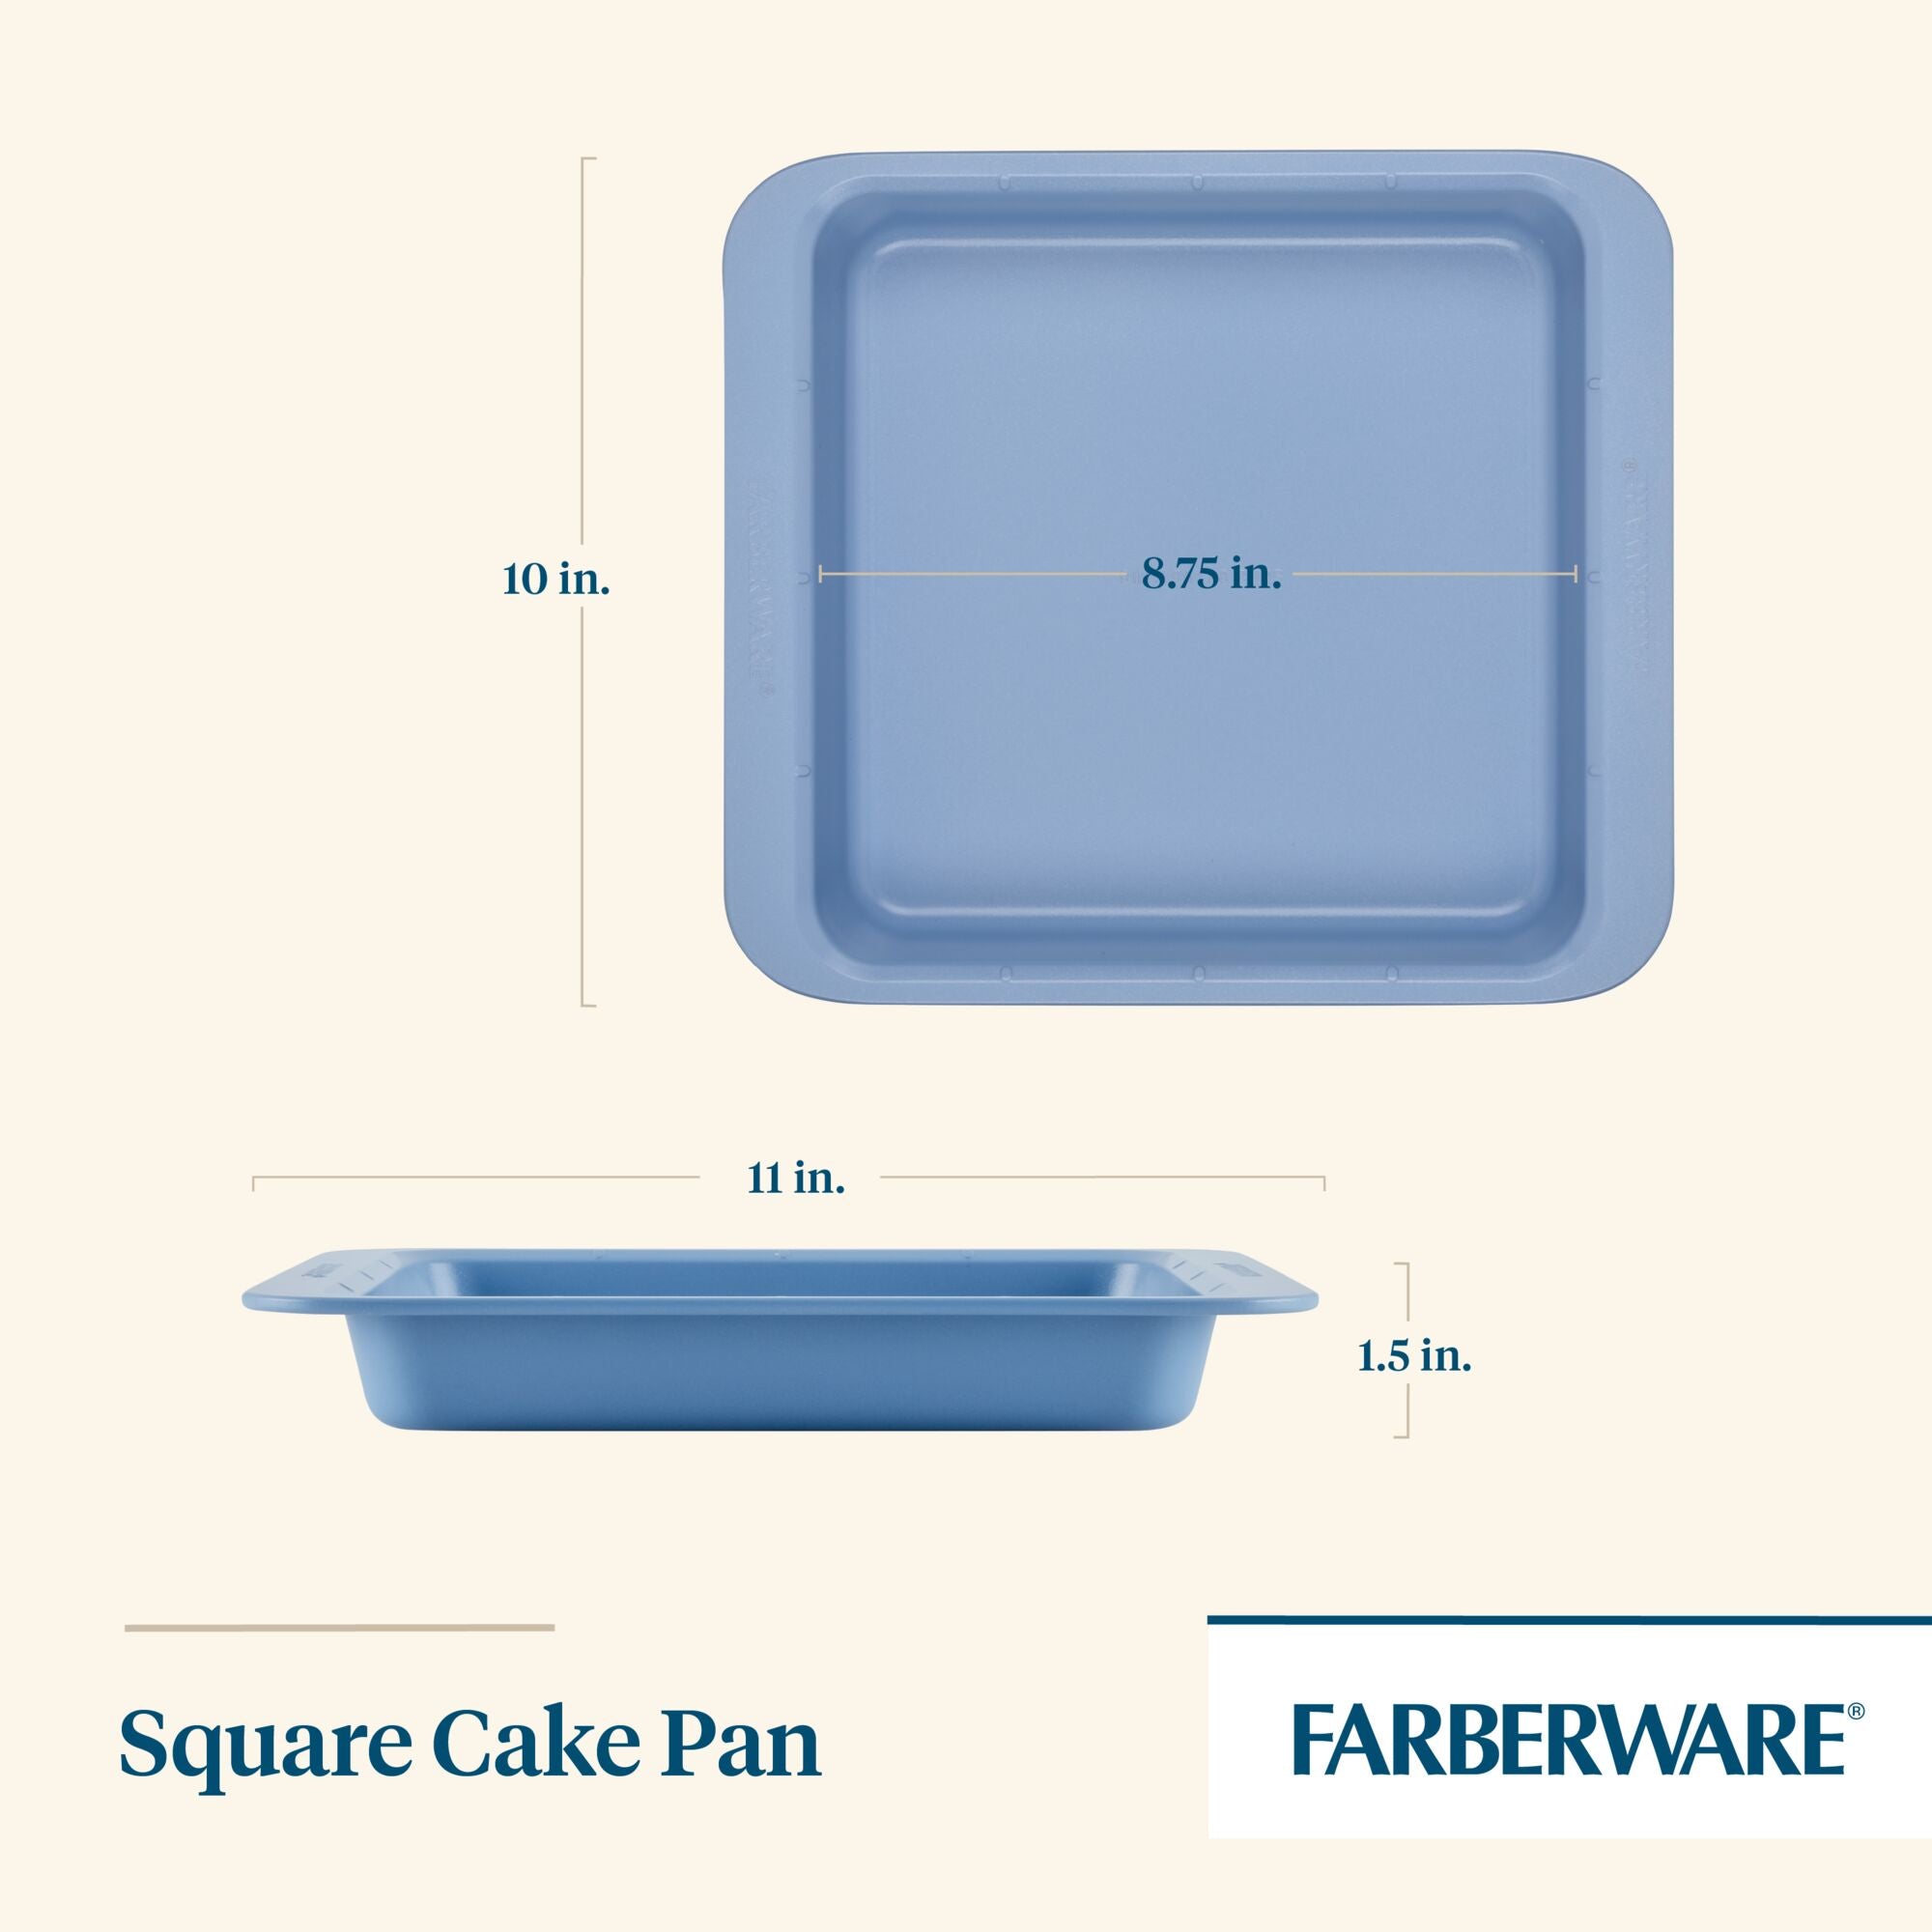 Square and Rectangular Cake Pans